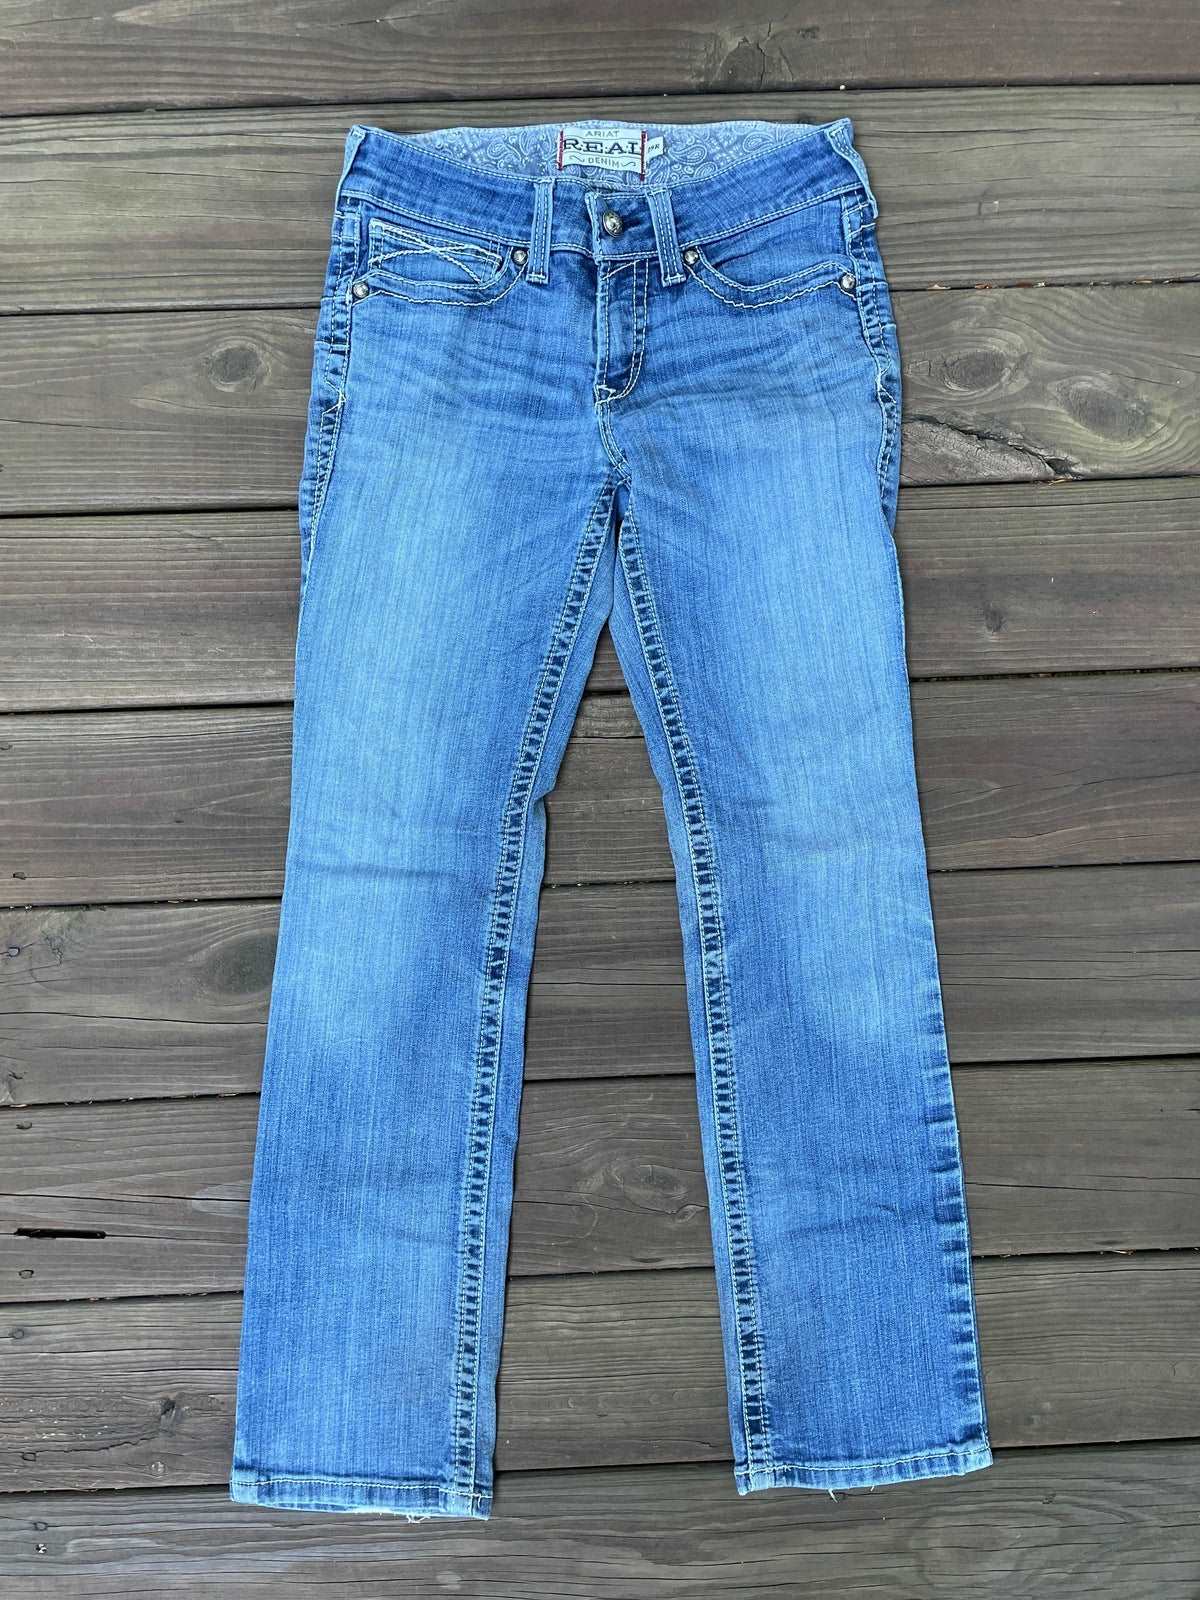 ThriftedEquestrian Clothing 29R Ariat Real Denim Jeans - 29R